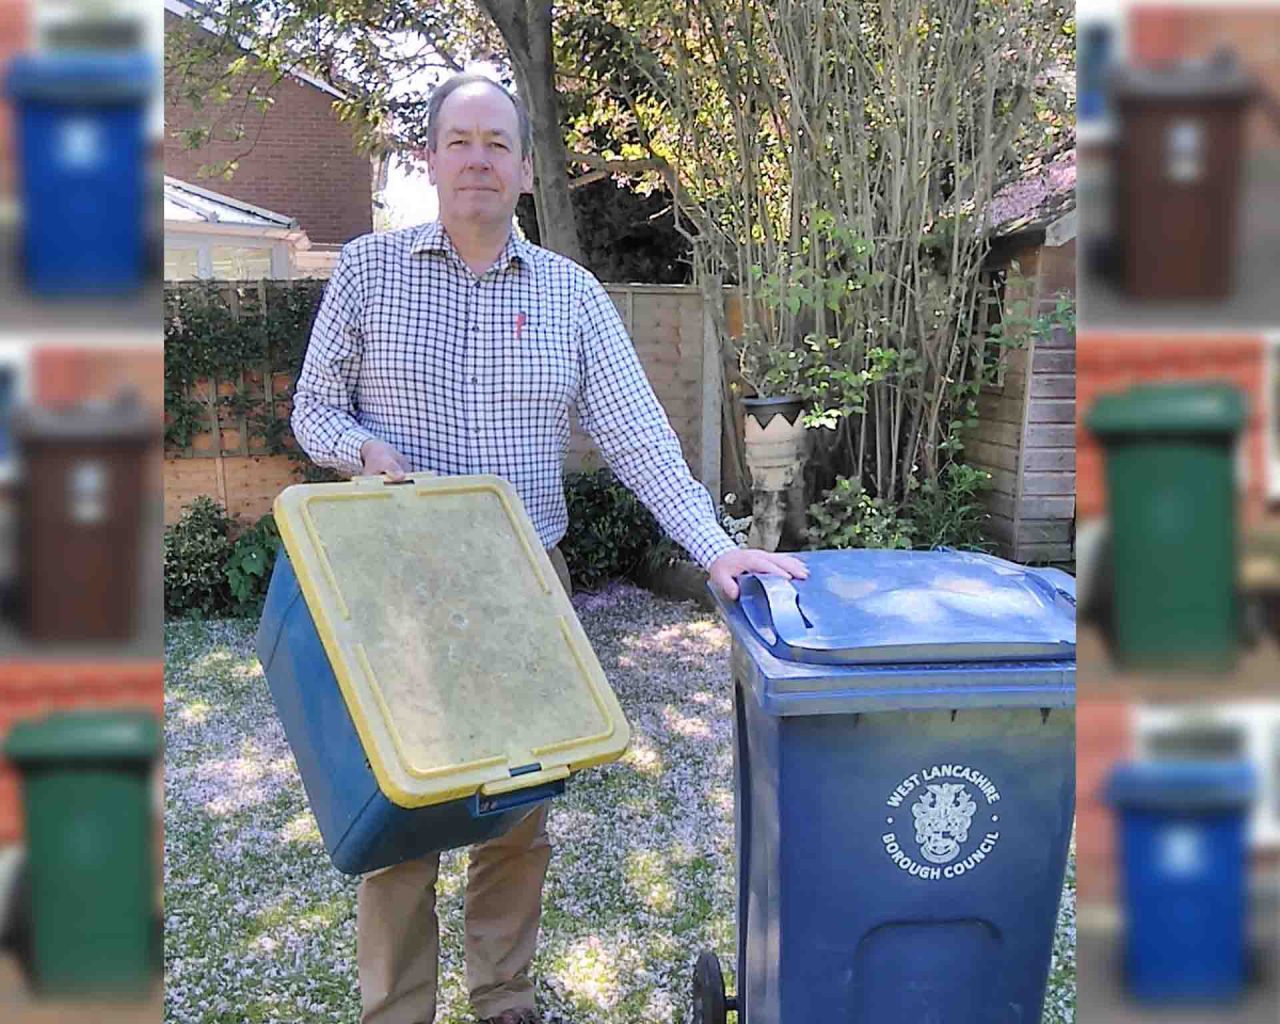 Cllr Owens with blue box and bin